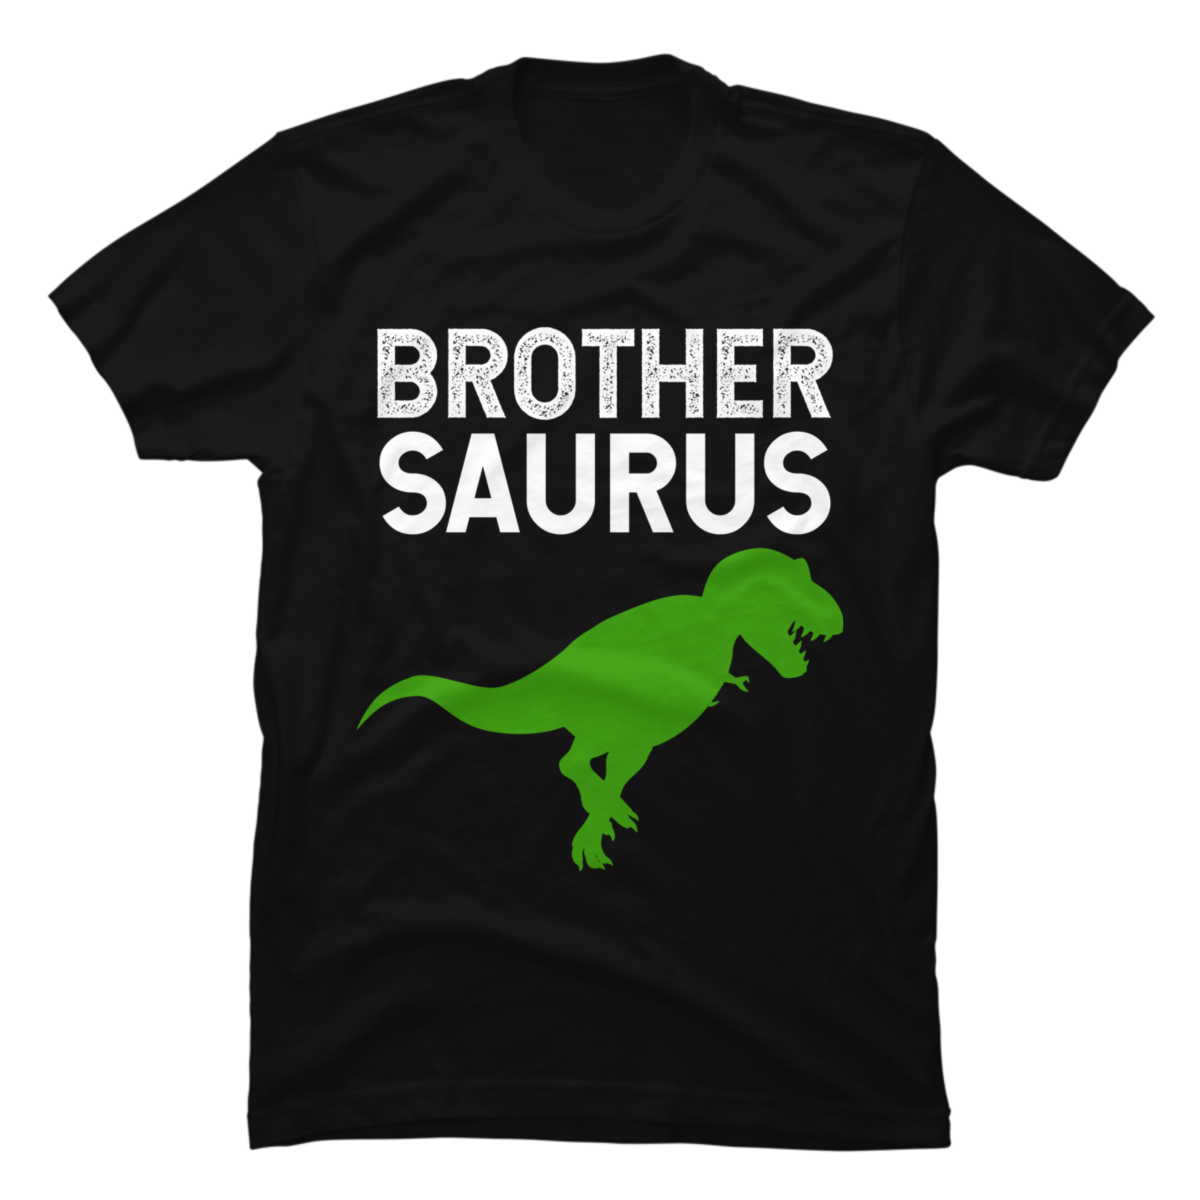 Brother Saurus T-Rex - Buy t-shirt designs